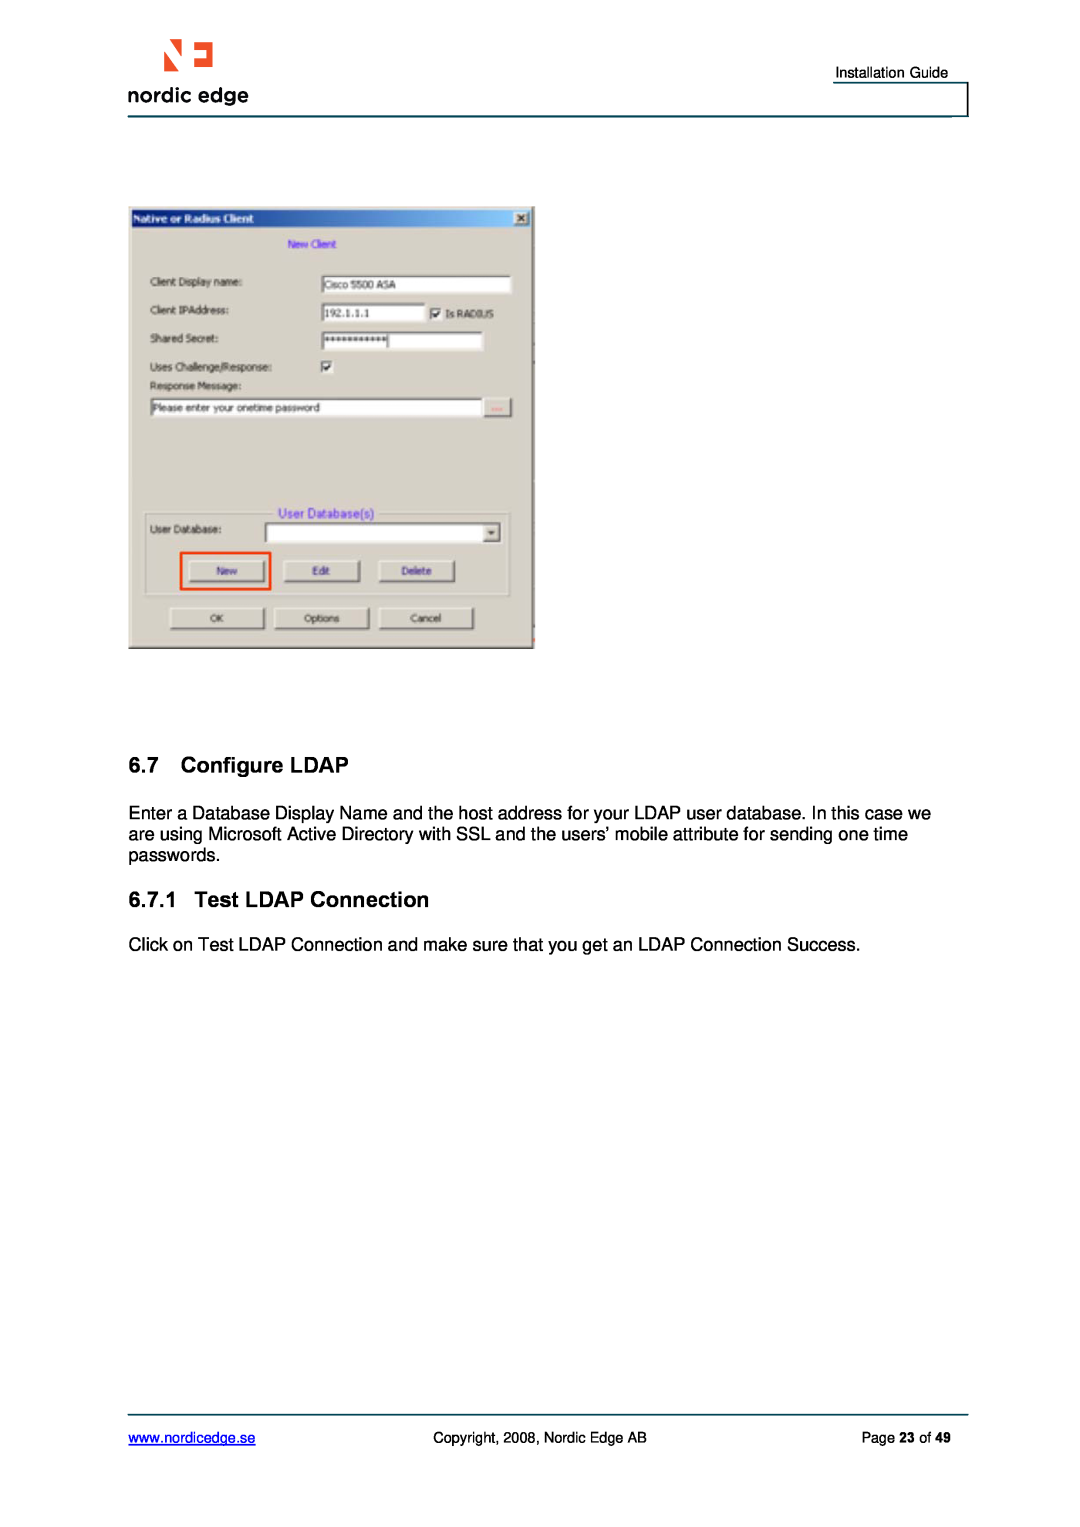 Cisco Systems ASA 5500 manual 6.7Configure LDAP, Test LDAP Connection, Page 23 of 